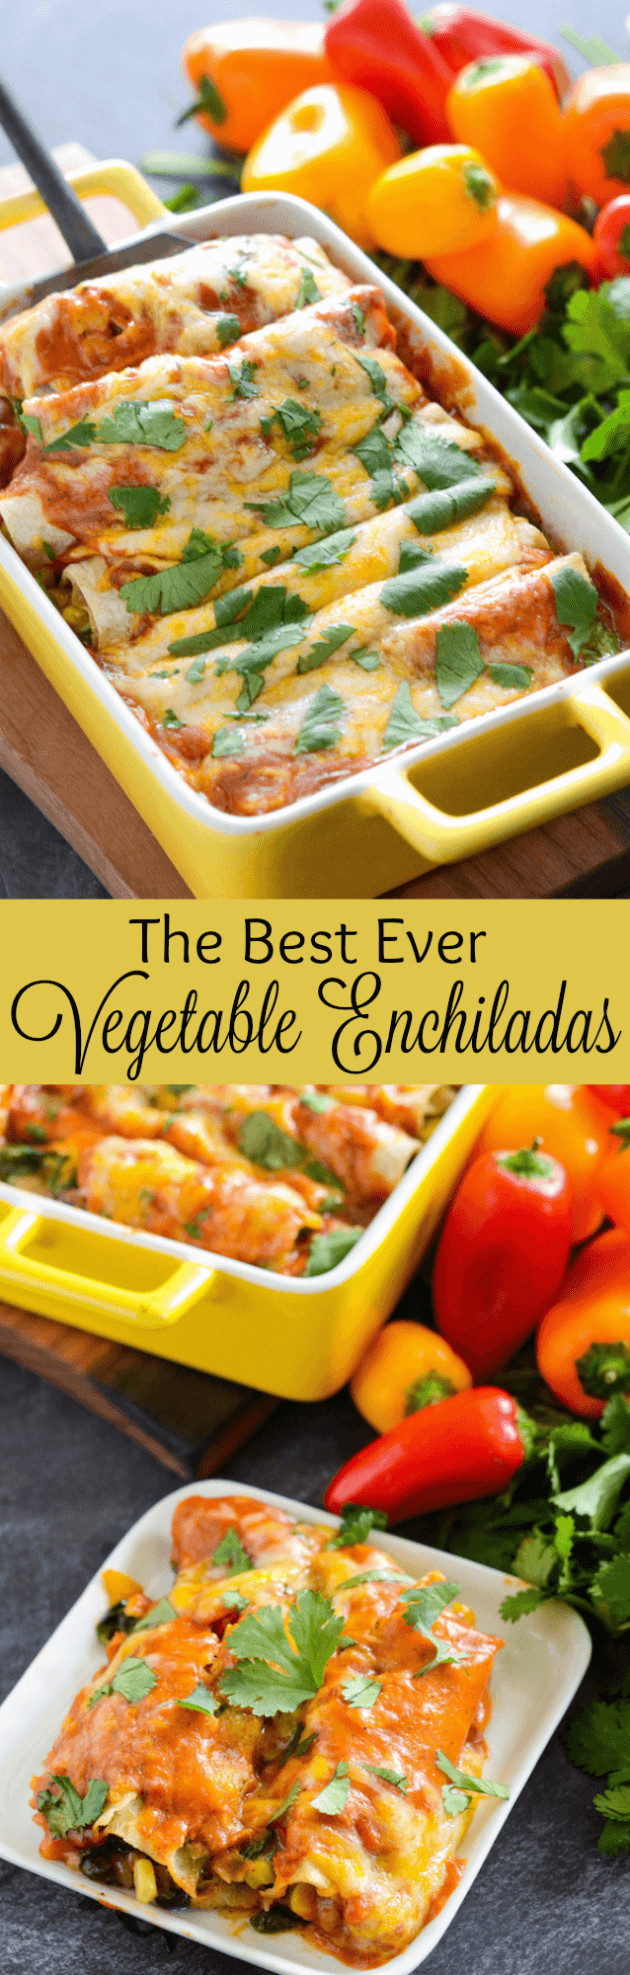 Enchiladas Recipes Vegetarian
 The Best Ve able Enchiladas